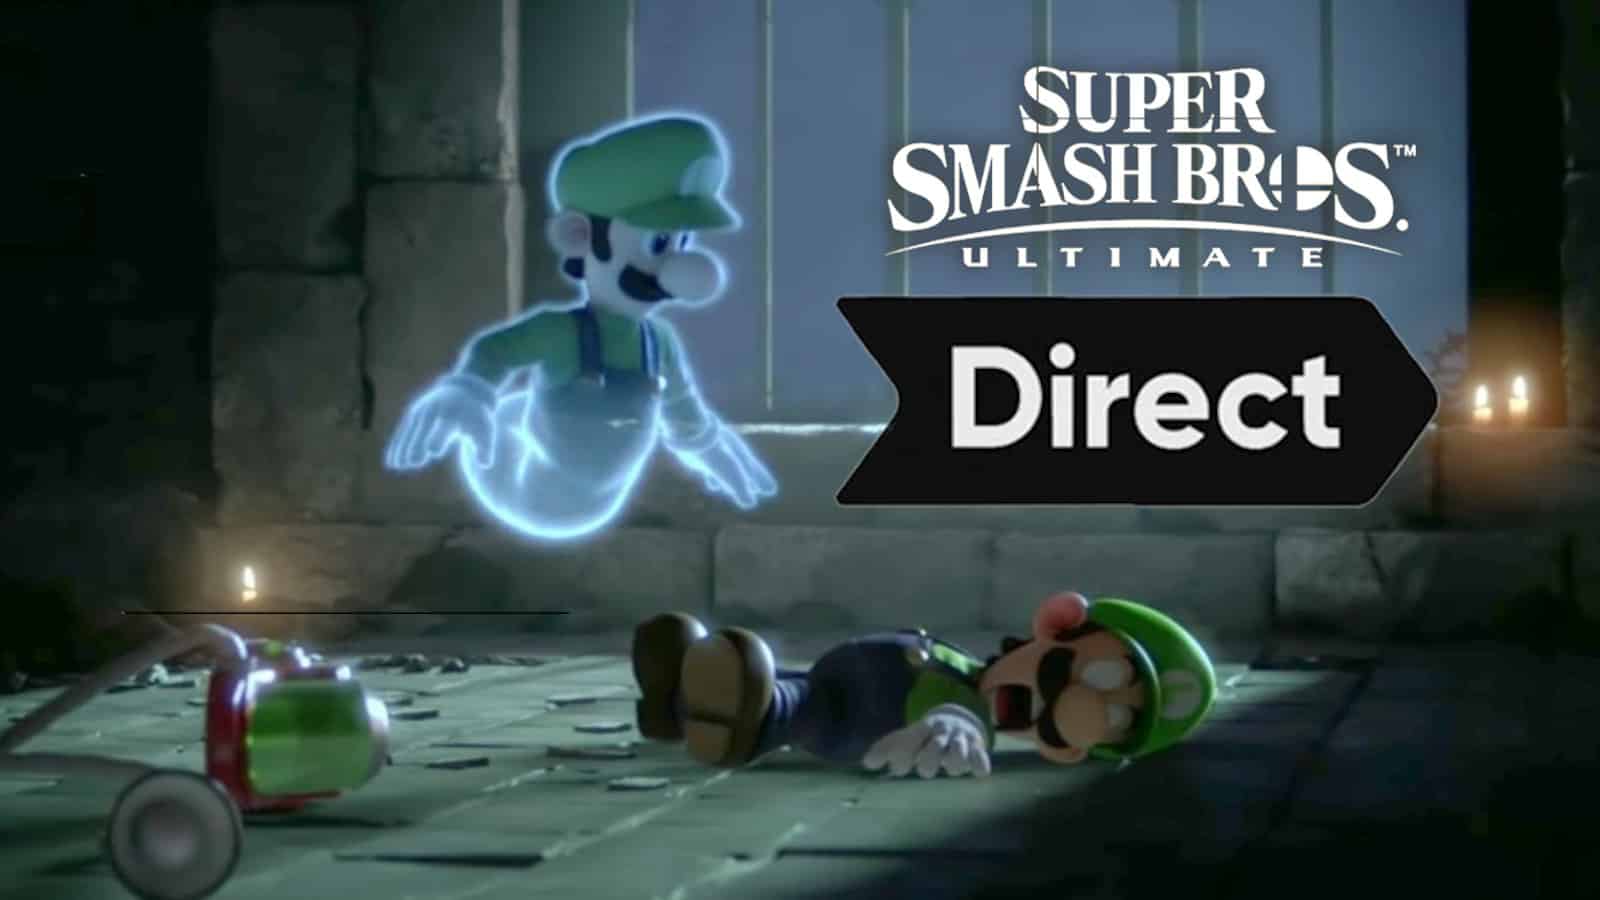 Smash Nintendo Direct vanishes